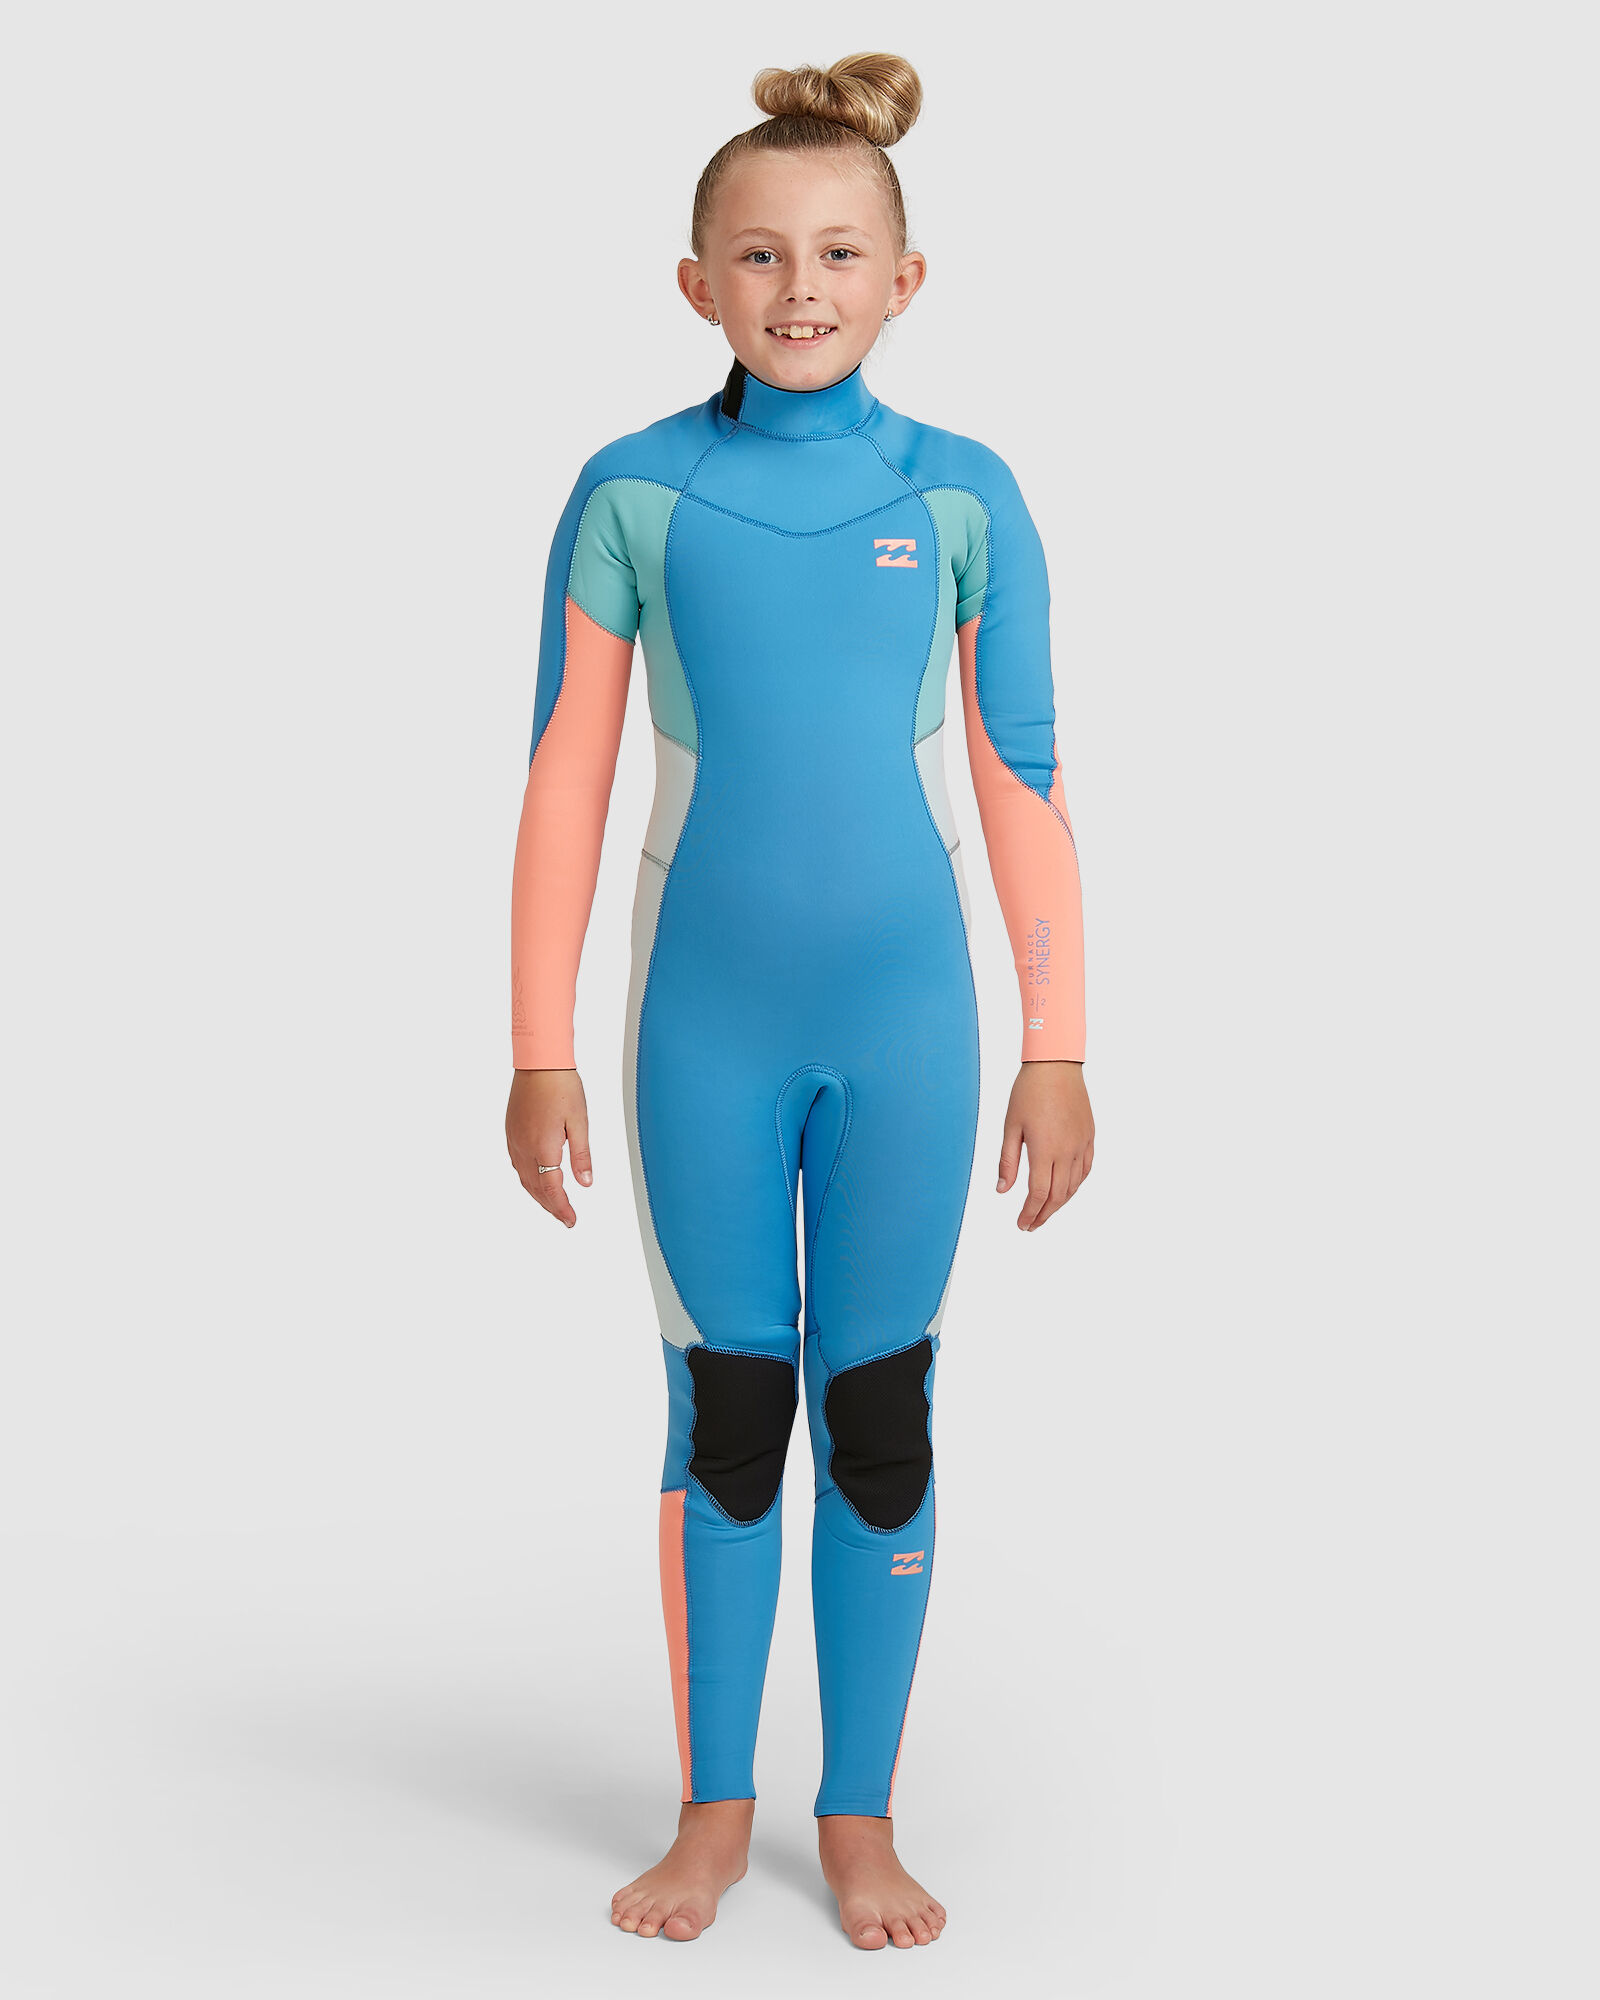 ls child model swimwear